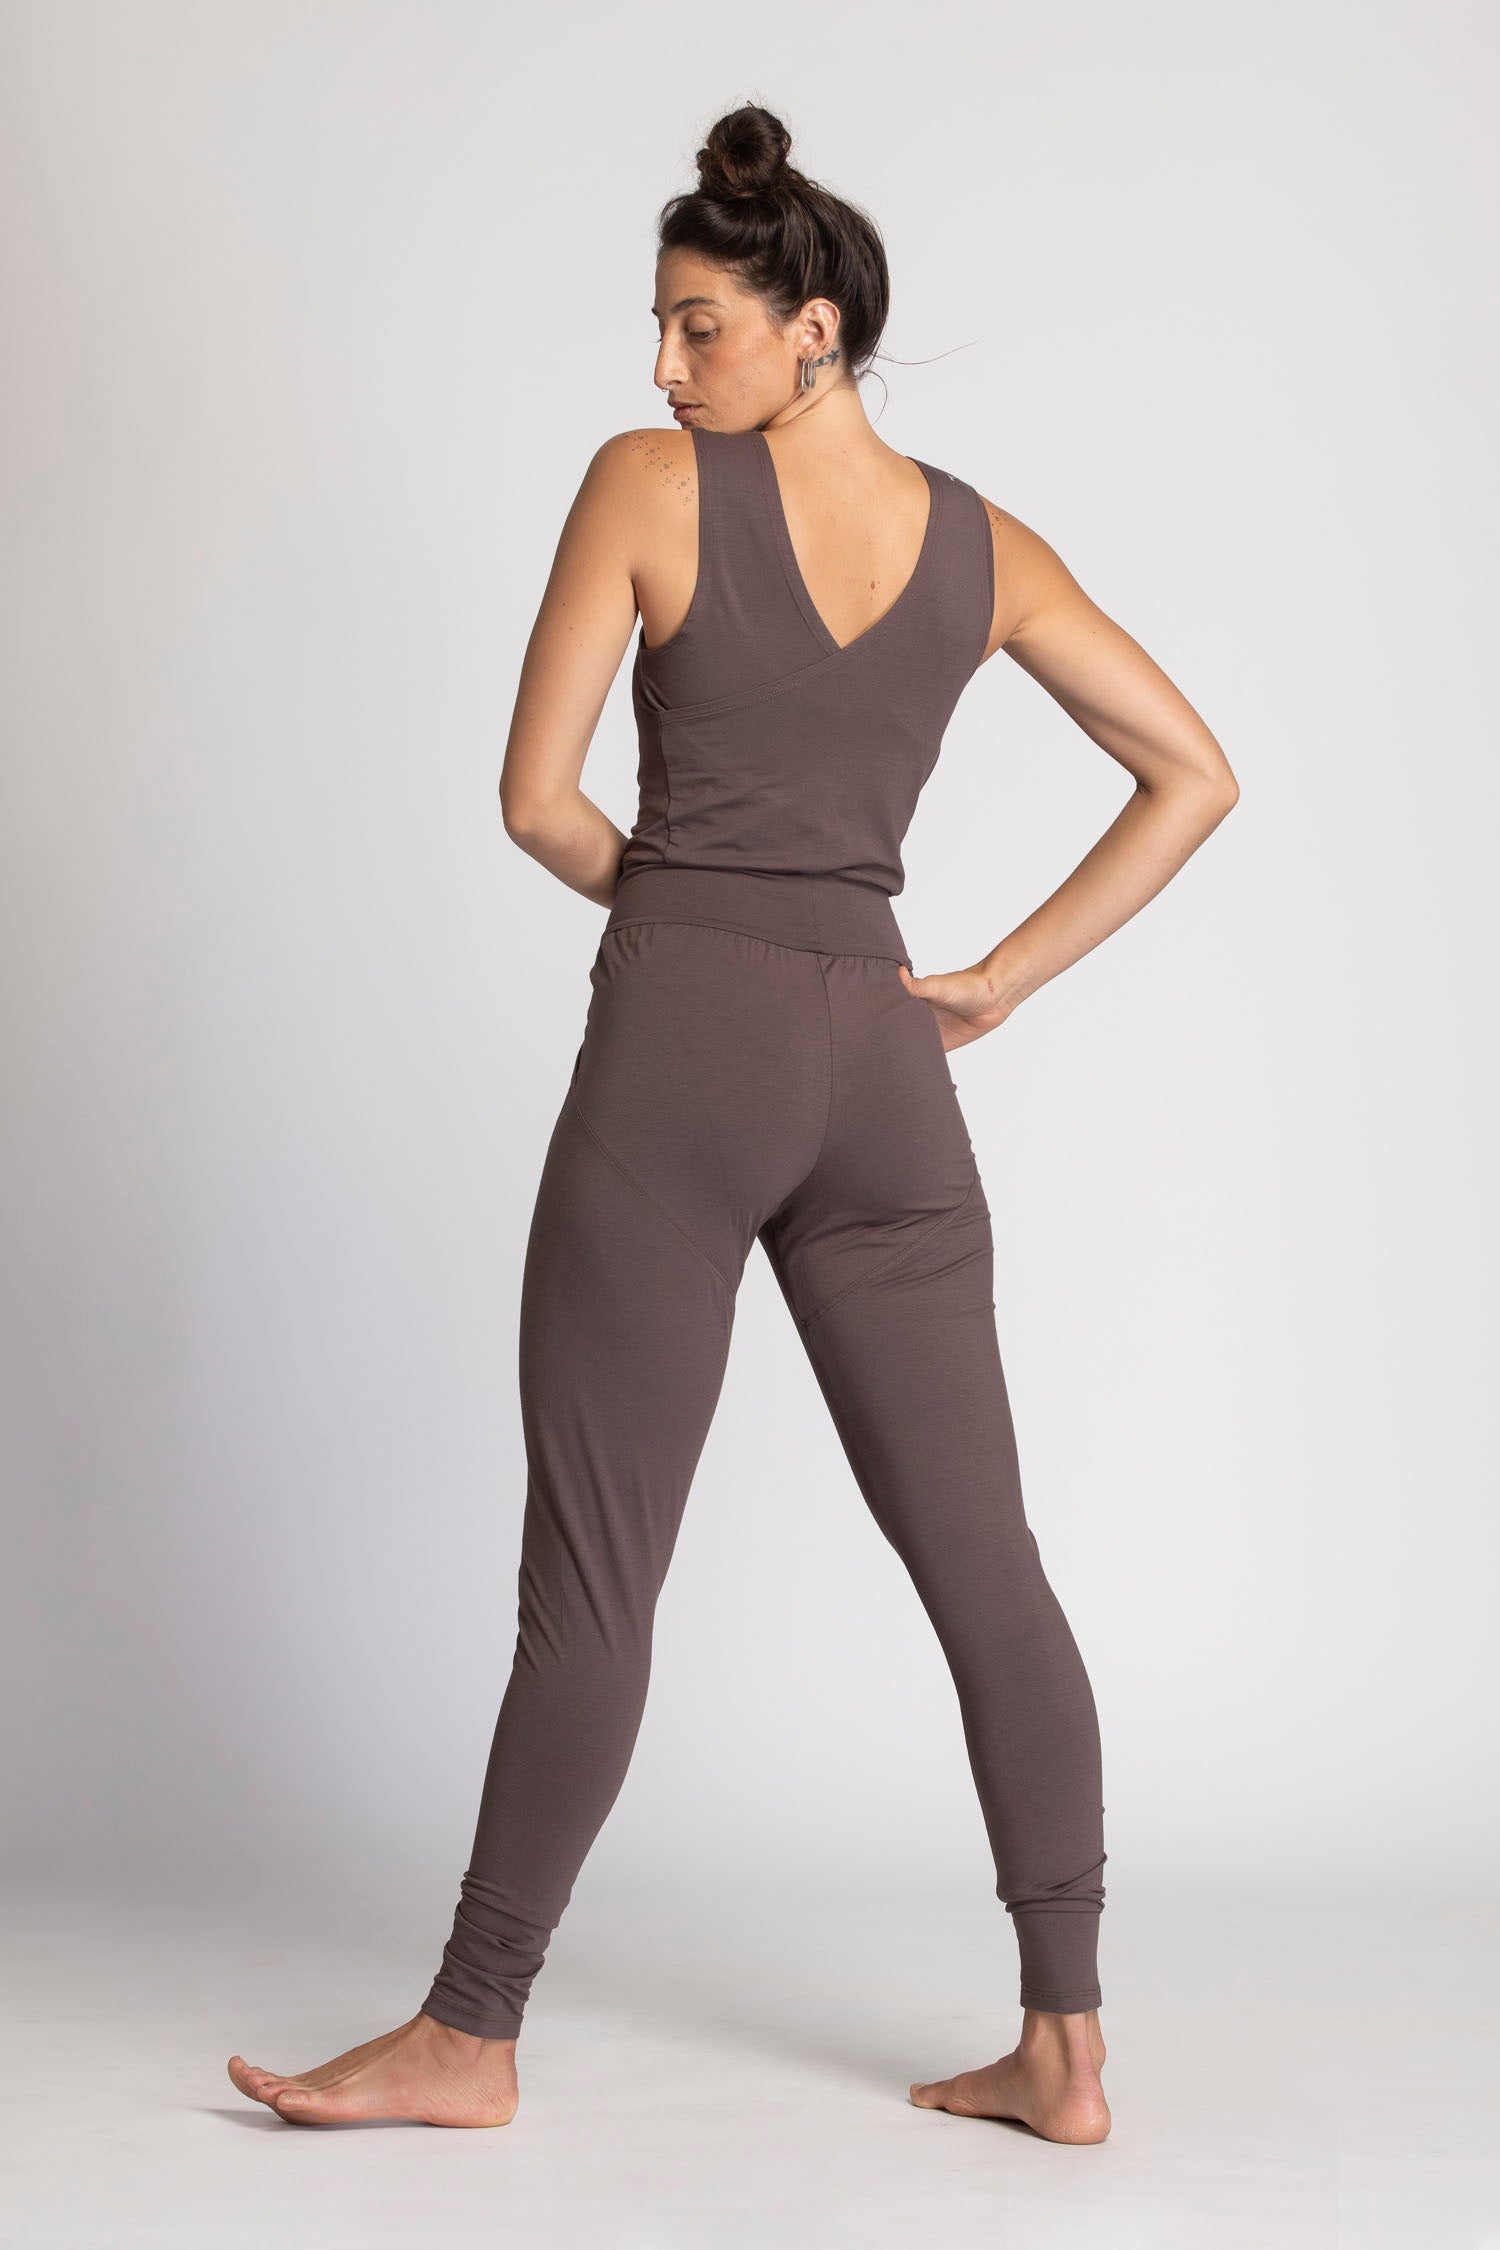 adviicd Yoga Pants For Women Dressy Yoga Jumpsuits For Women Women's Long  Biker Yoga Compression pants High Waist Knee Length Spandex Workout pants  Black M 